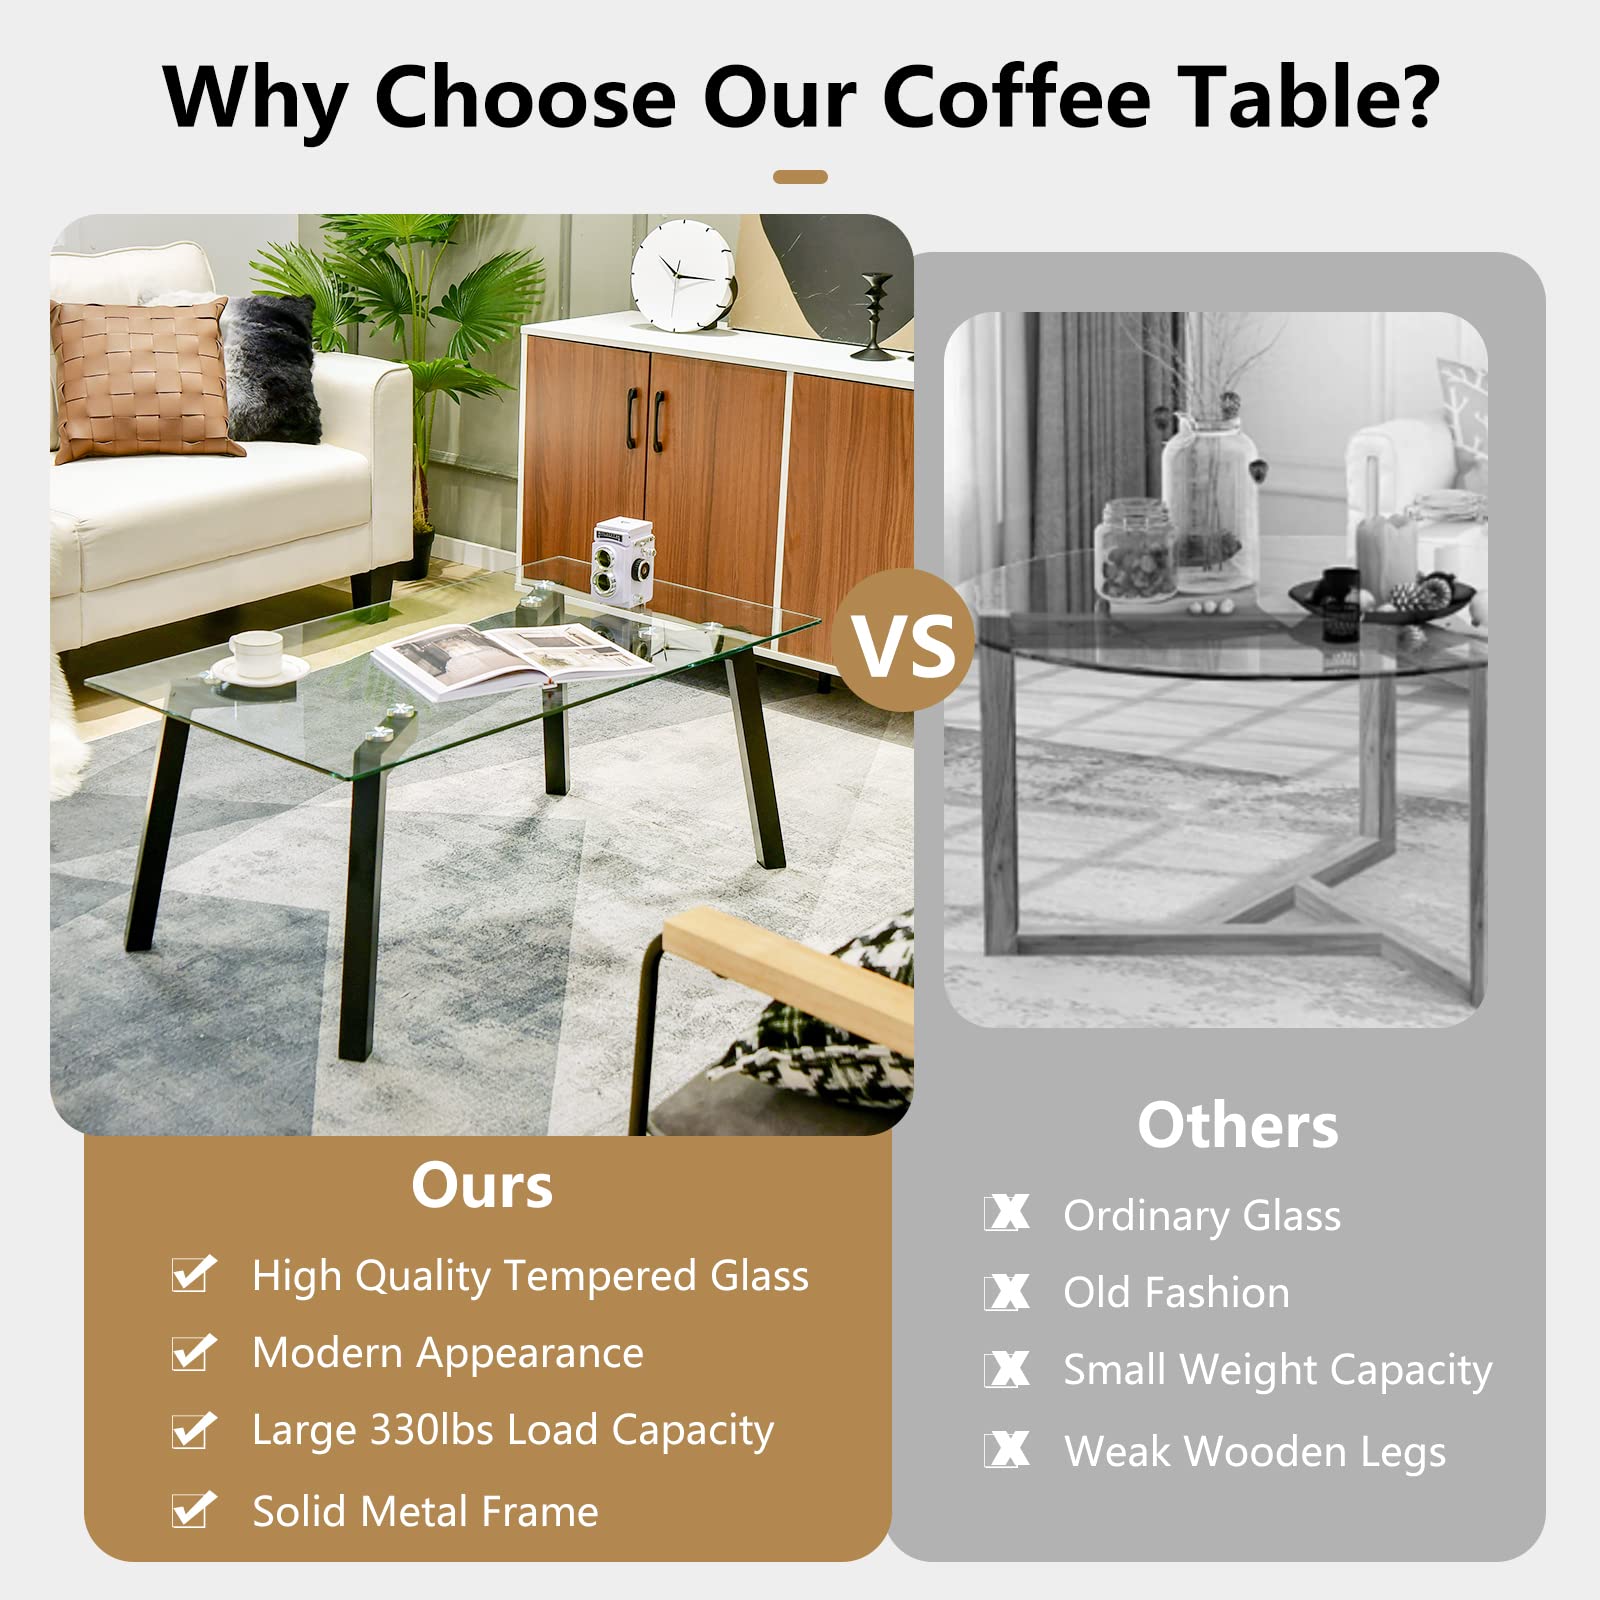 Giantex Rectangular Tempered Glass Coffee Table - Glass-top Tea Table w/Metal Legs